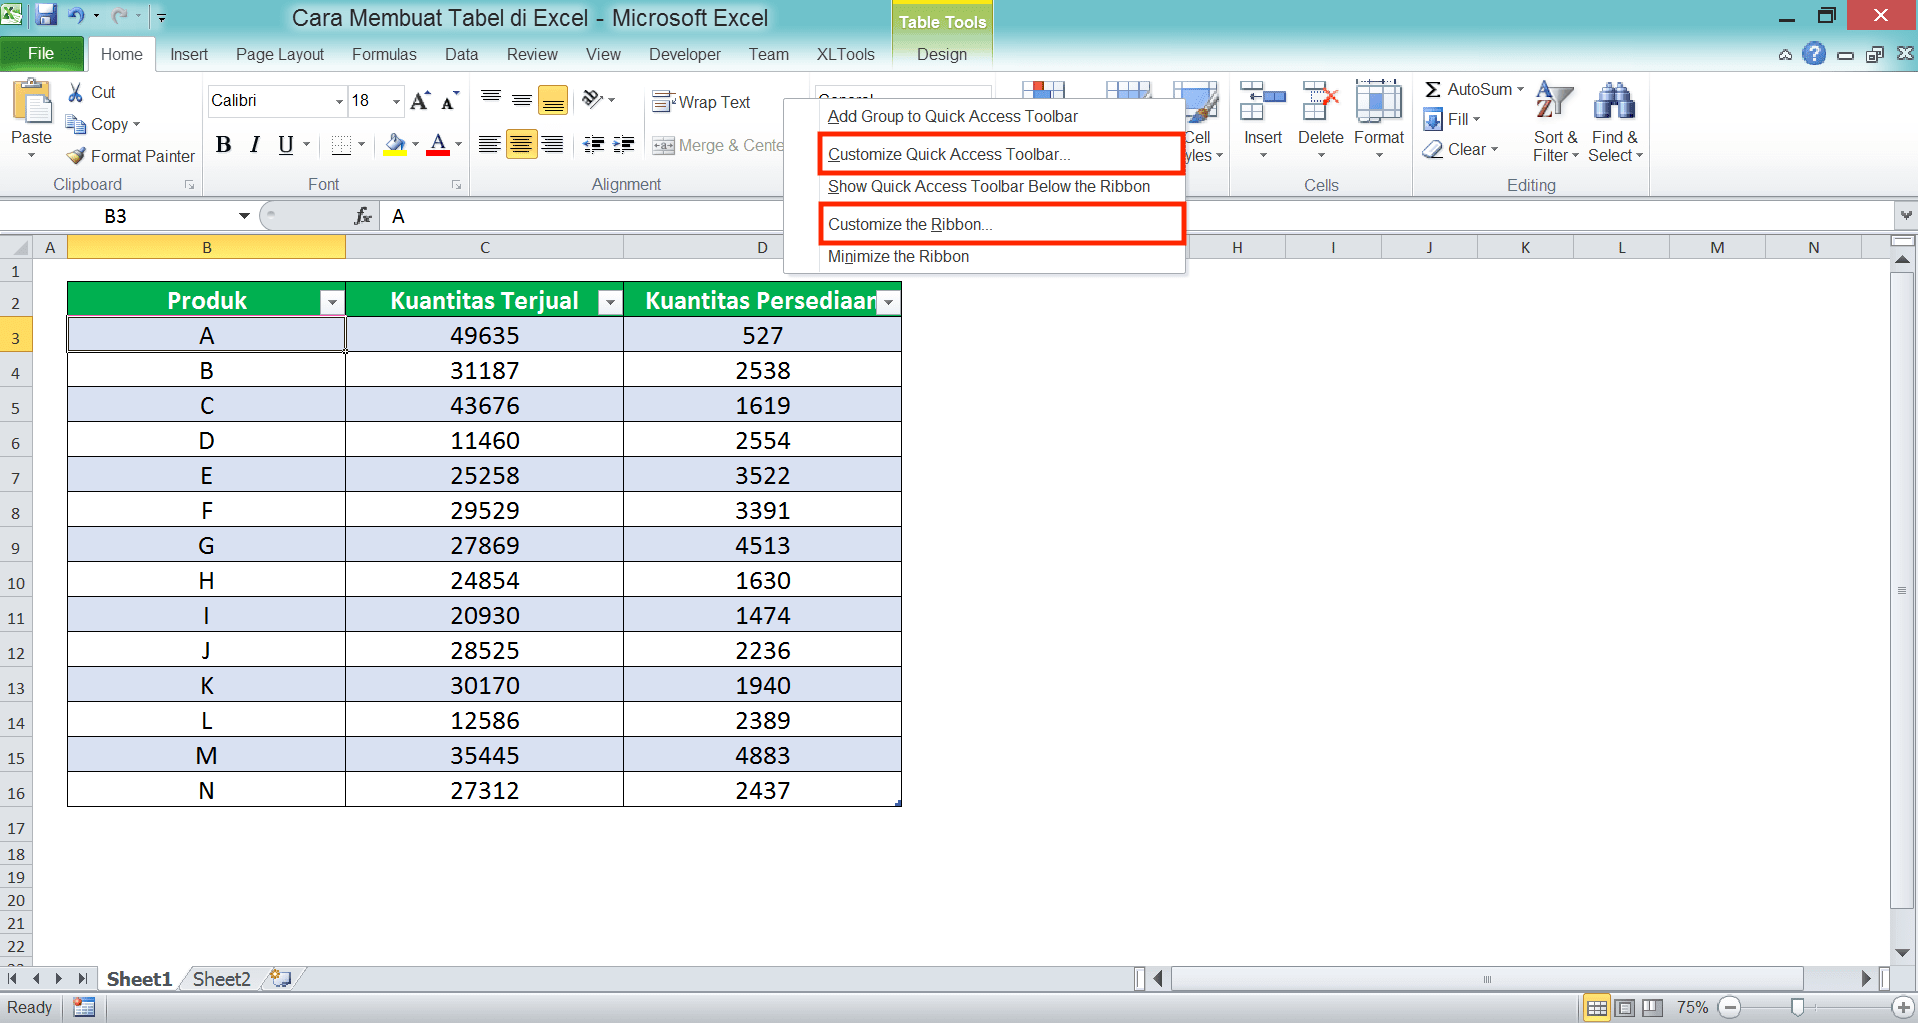 Cara Membuat Tabel di Excel - Screenshot Lokasi Pilihan Customize Quick Access Toolbar…/Customize the Ribbon… di Excel